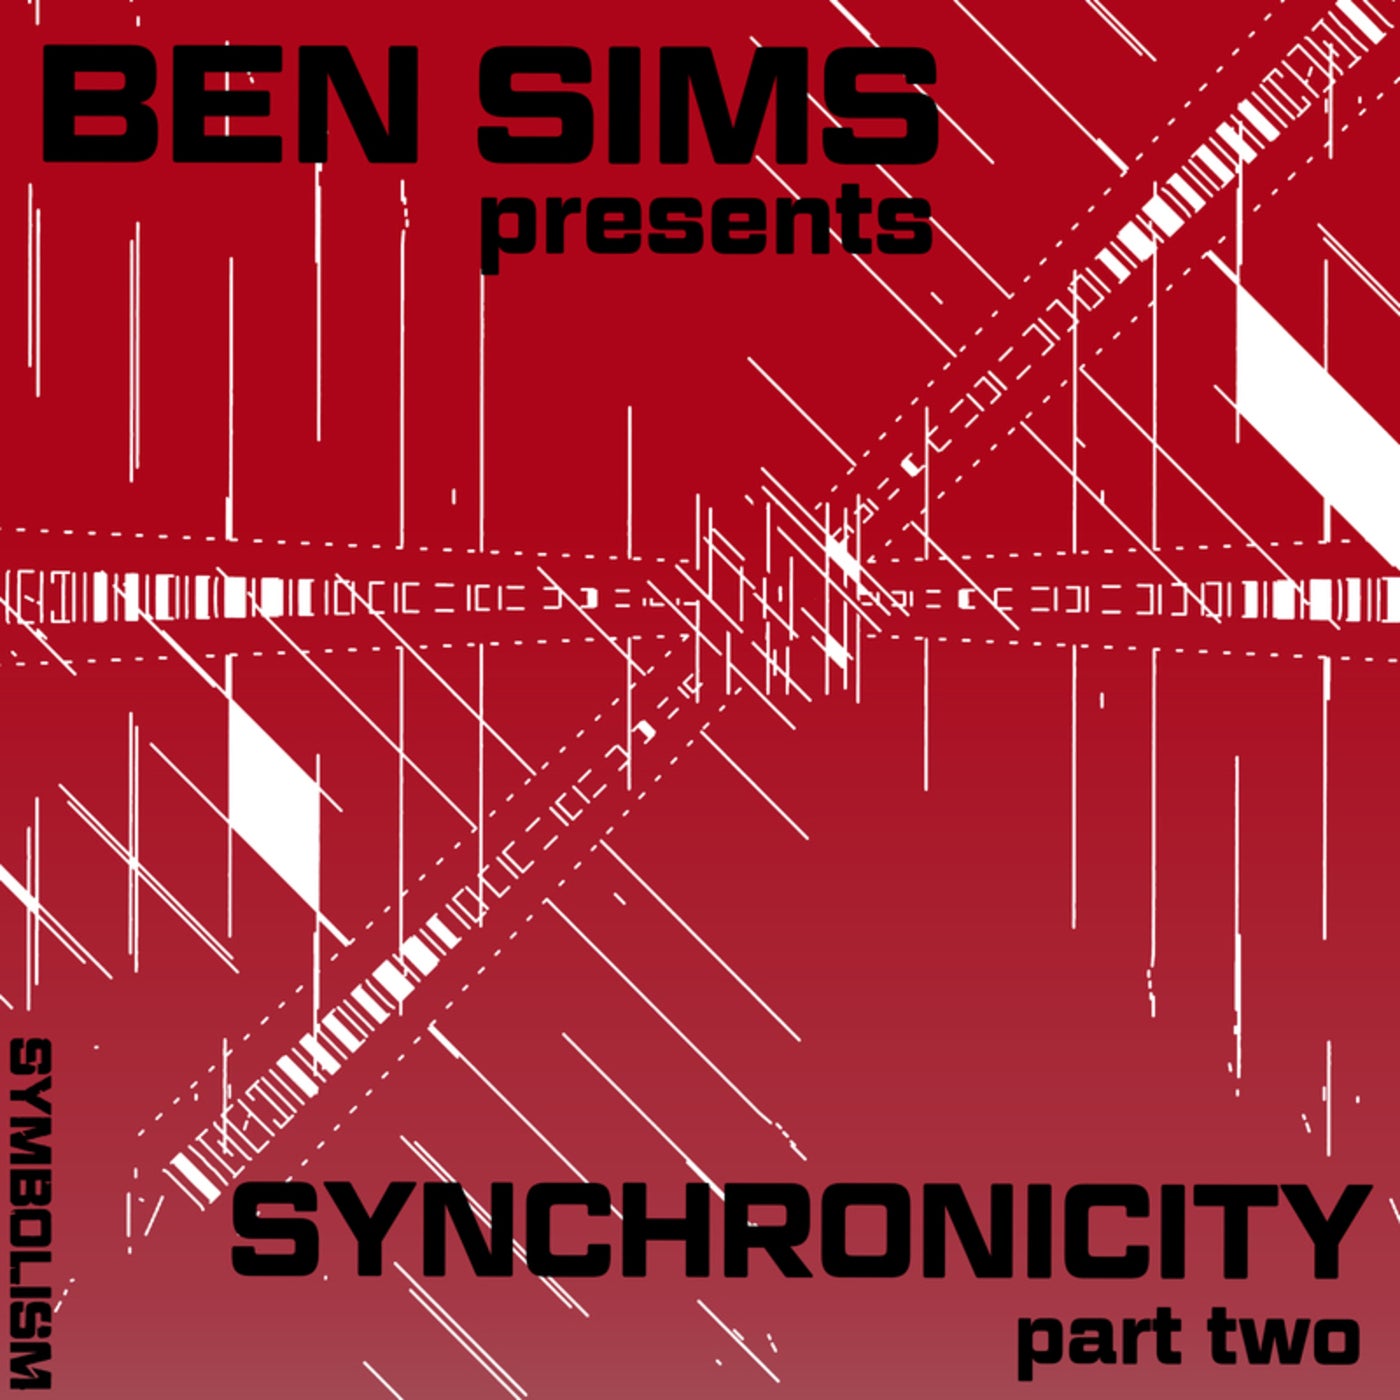 BEN SIMS PRESENTS SYNCHRONICITY PART TWO [SYMDIGICOMP002]